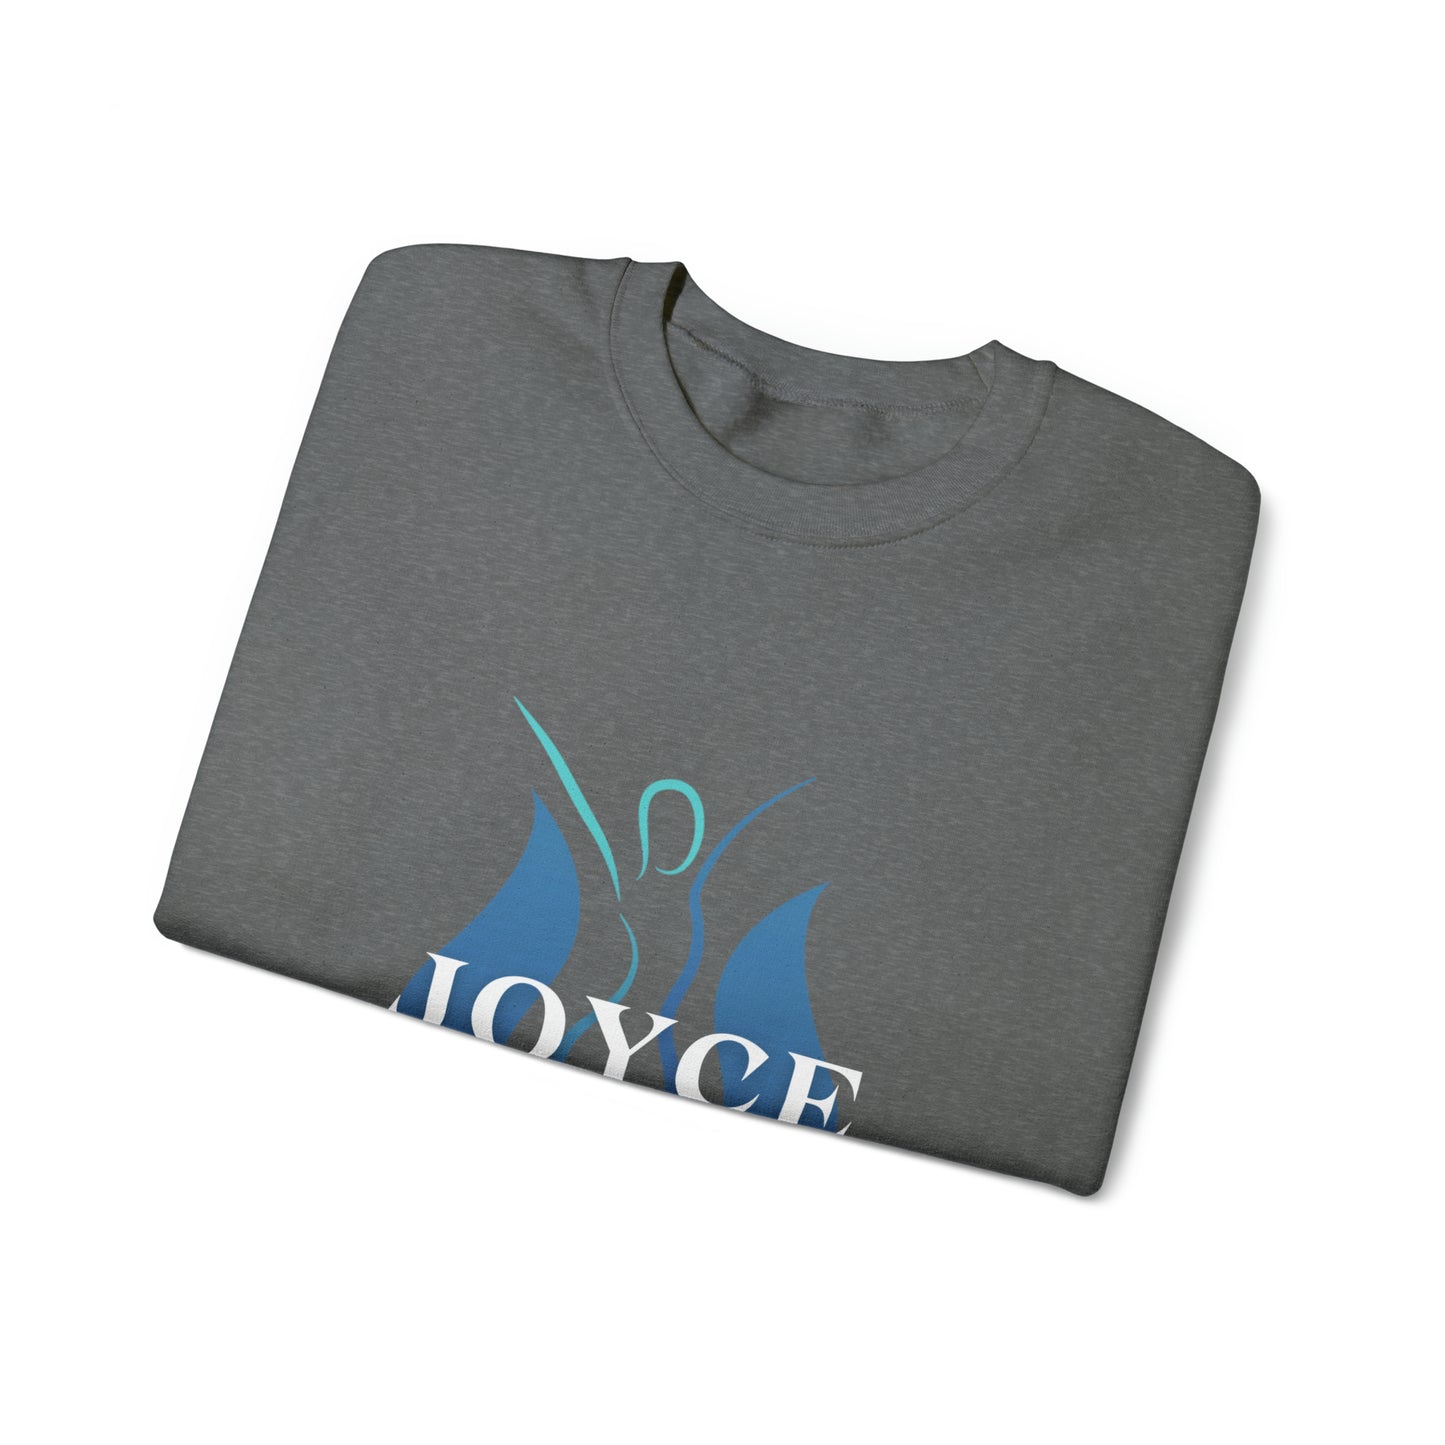 Joyce: A tribute to Strength, Dignity, and Grace--Crewneck Sweatshirt